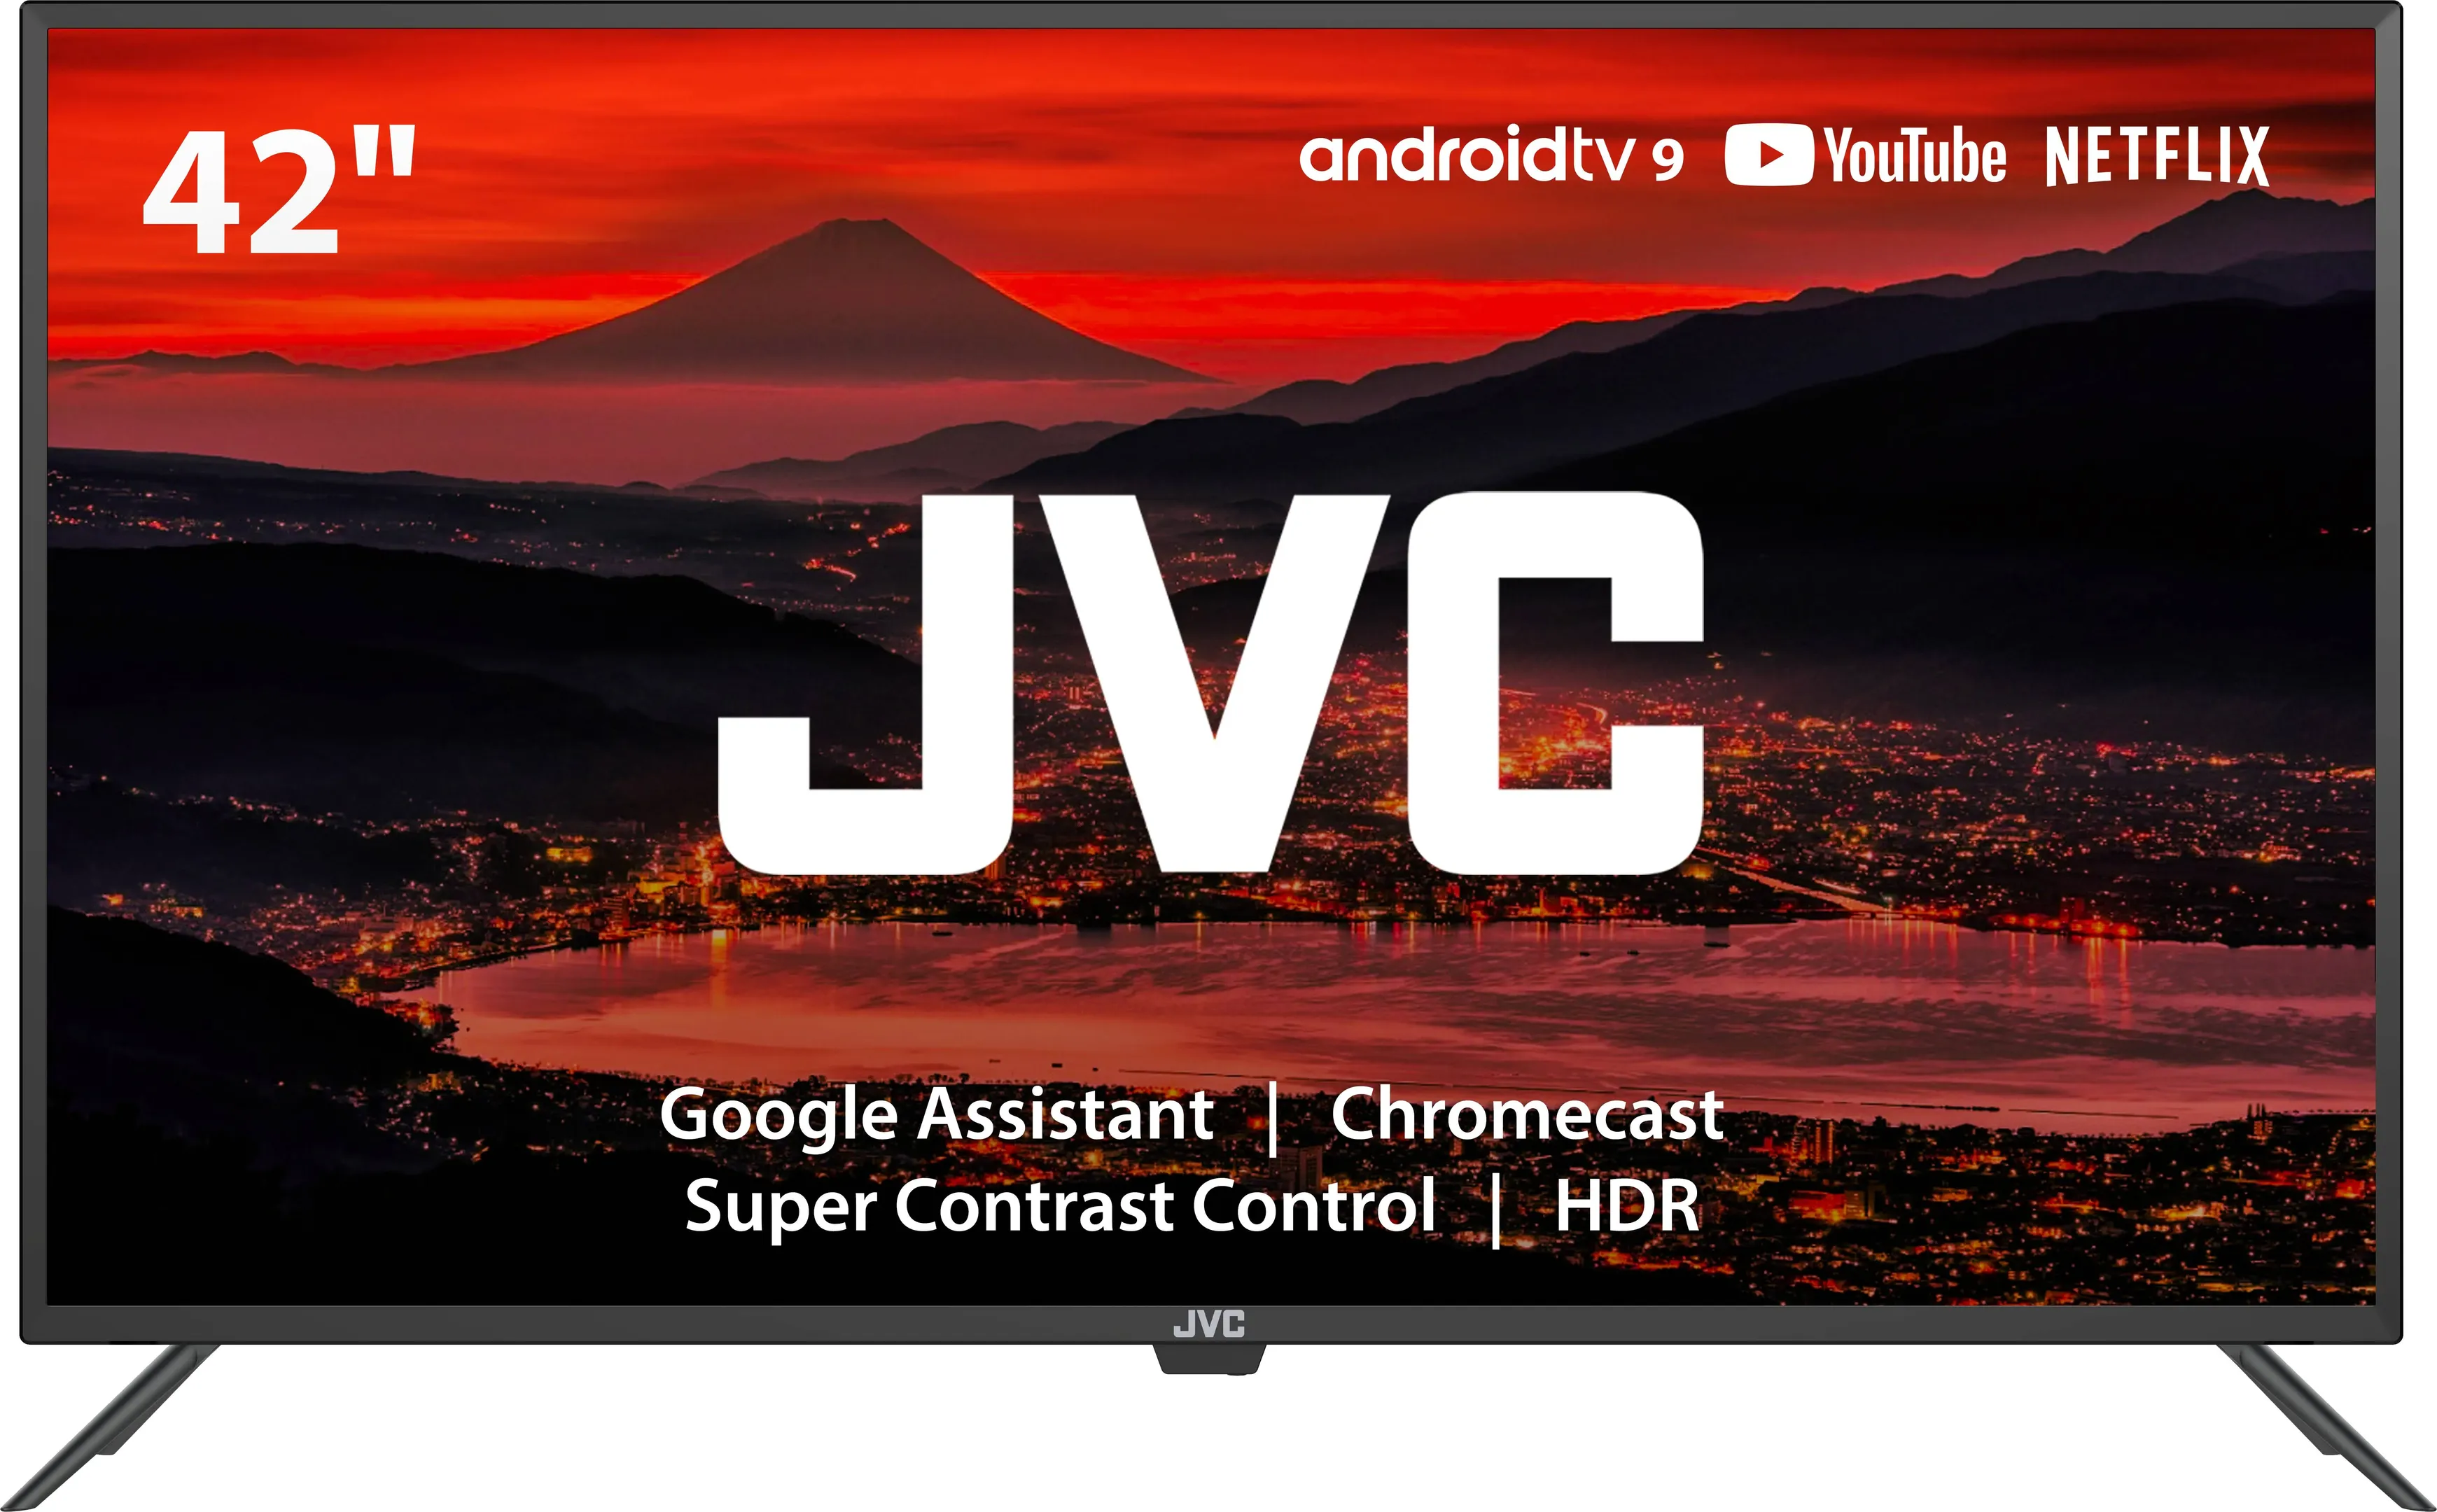 LCD-телевизоры серии LH905 — новые шедевры от JVC